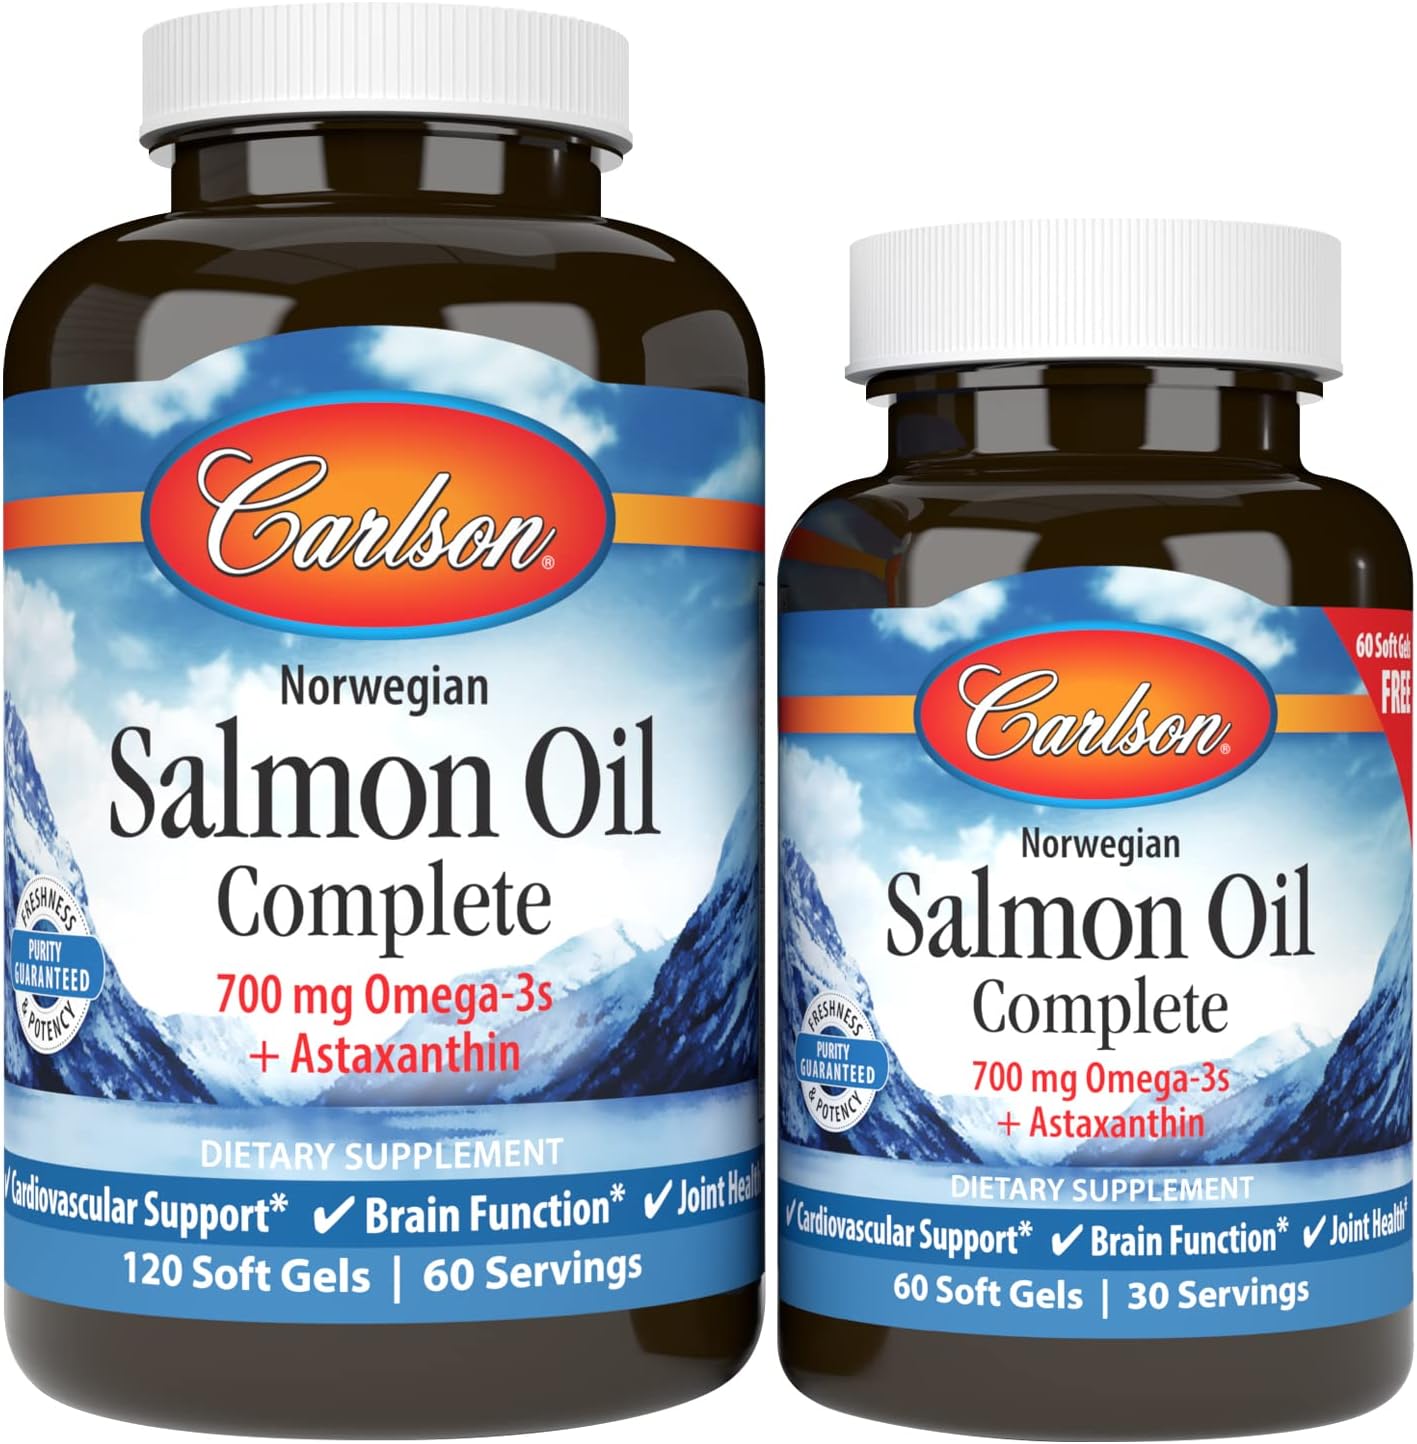 Carlson - Salmon Oil Complete, 700 mg Omega-3s + Astaxanthin, Norwegian, Heart, Brain & Joint Health, 120+60 Softgels